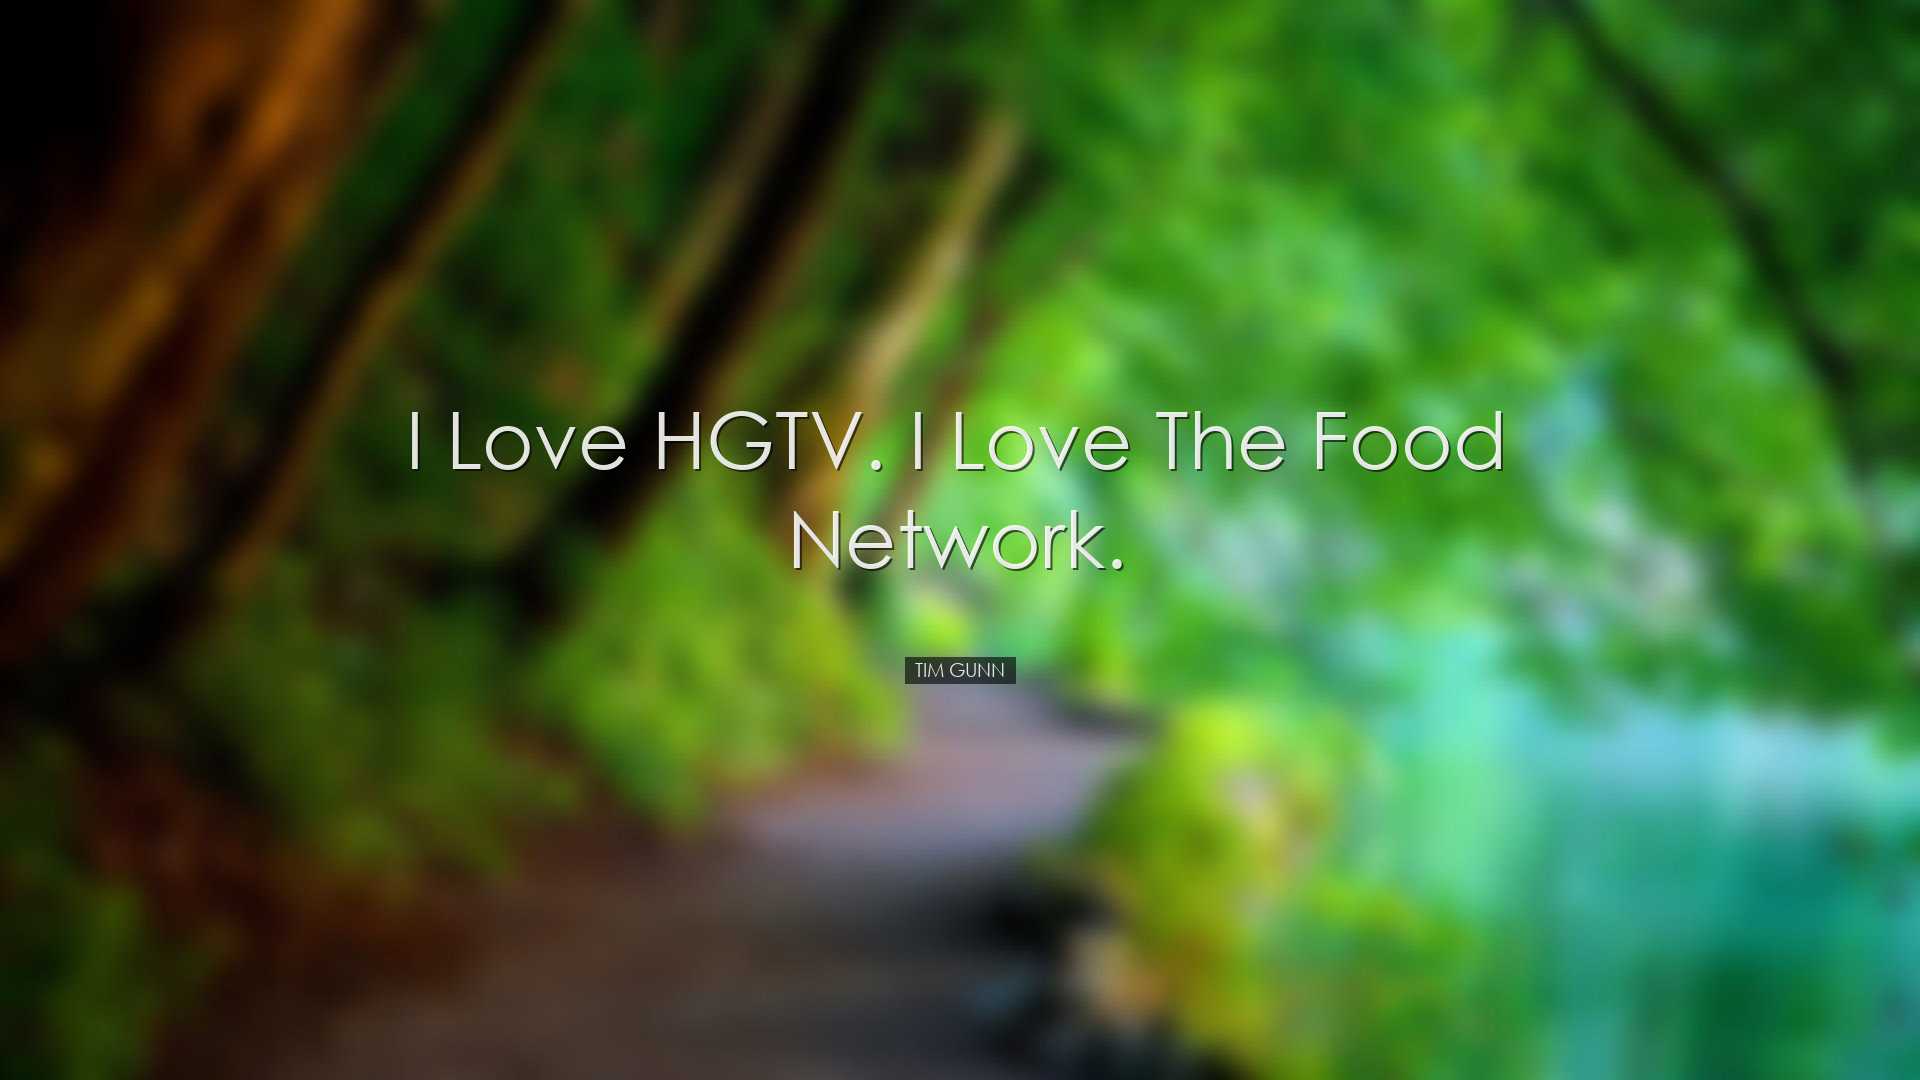 I love HGTV. I love the Food Network. - Tim Gunn